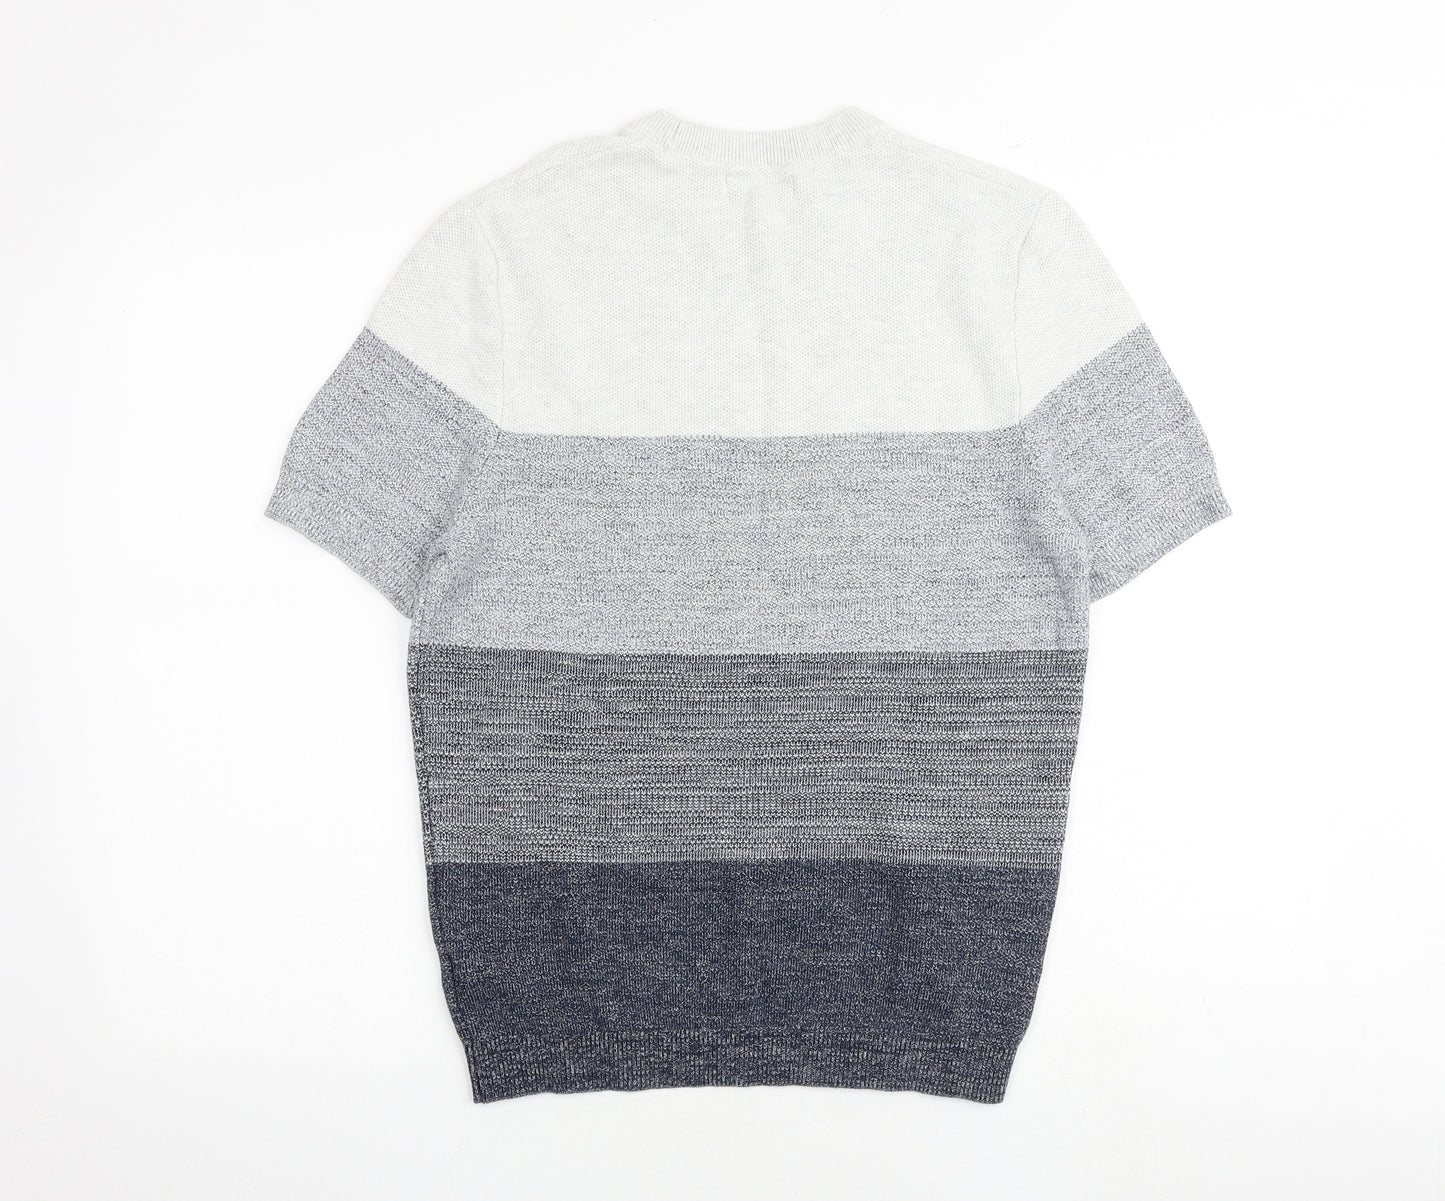 NEXT Mens Multicoloured Striped Cotton T-Shirt Size M Round Neck